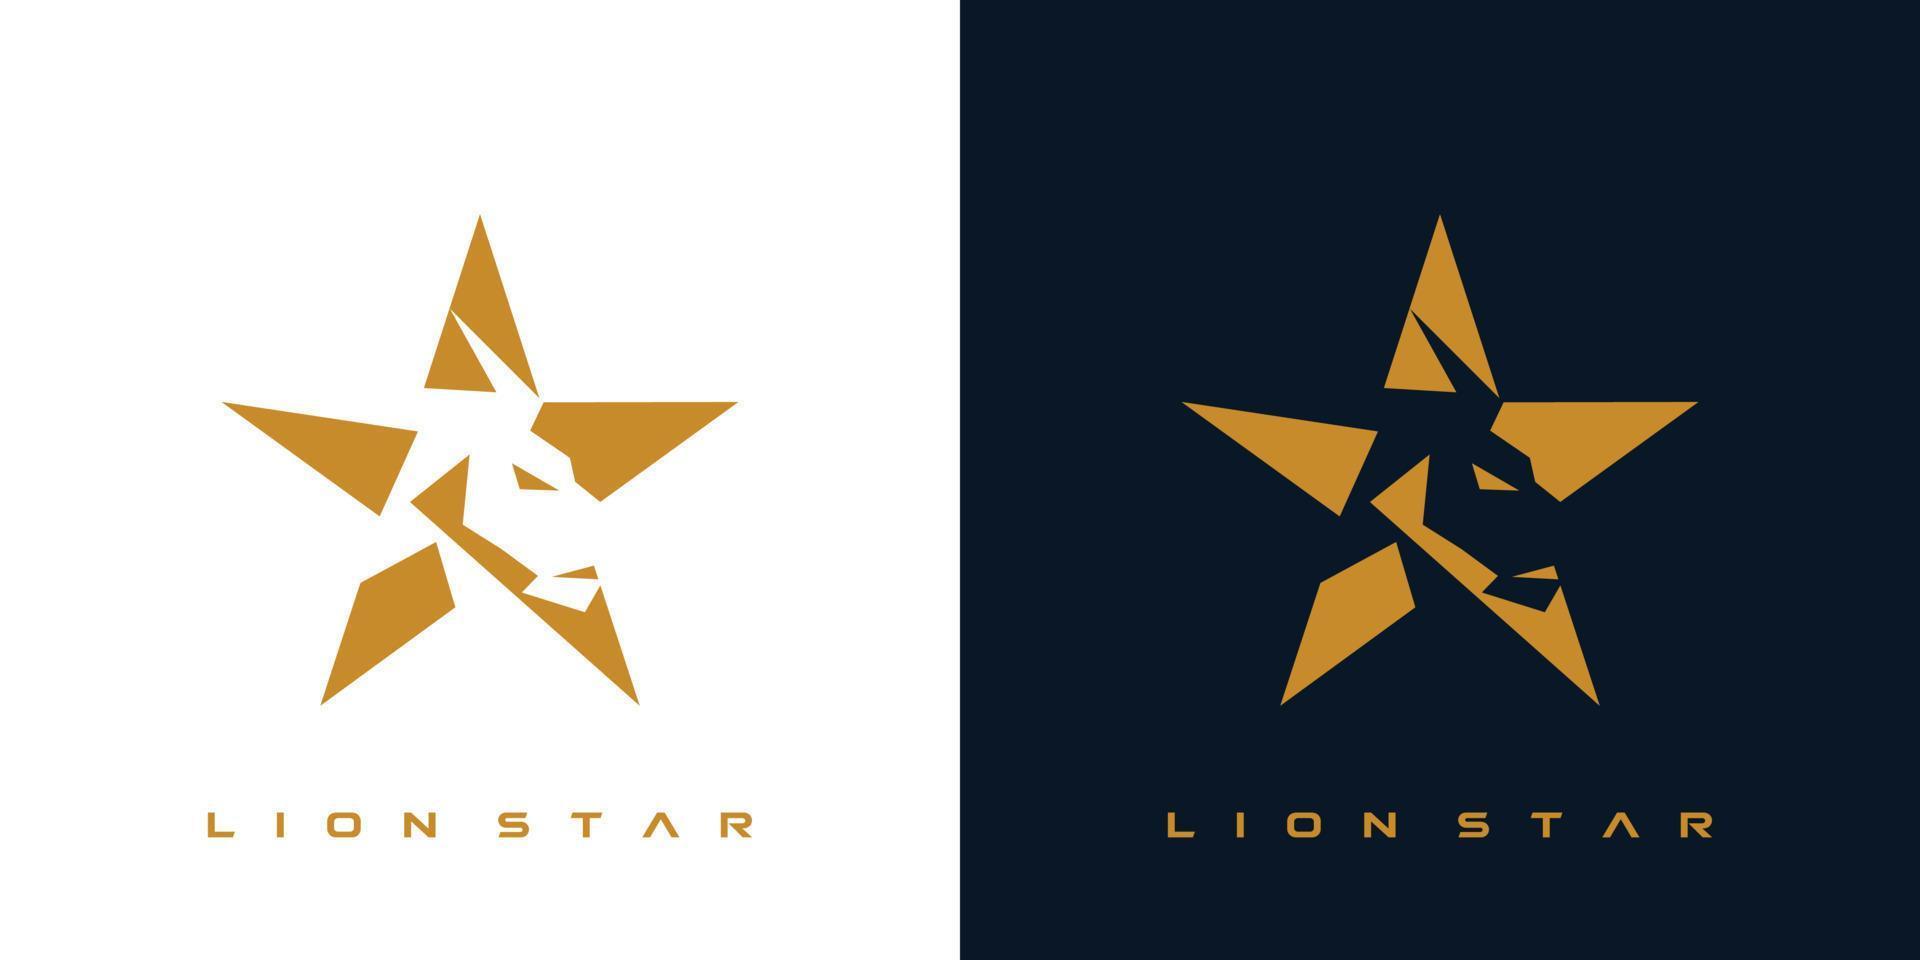 Lion star logo design modern and powerful vector